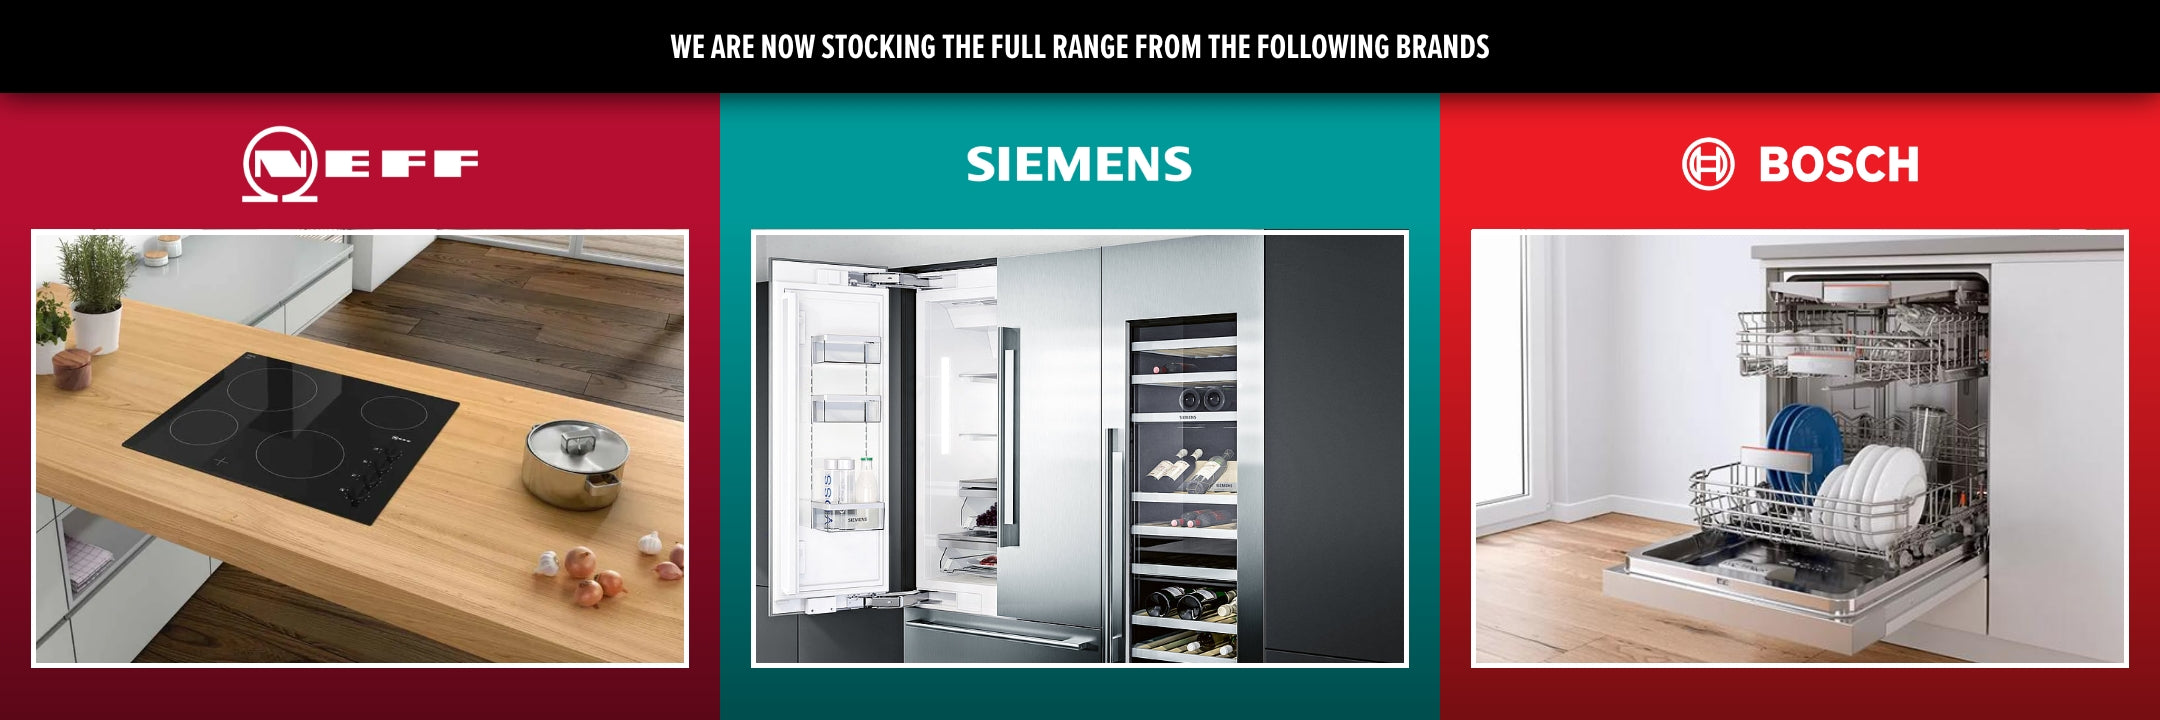 New Brands - Neff, Siemens, Bosch